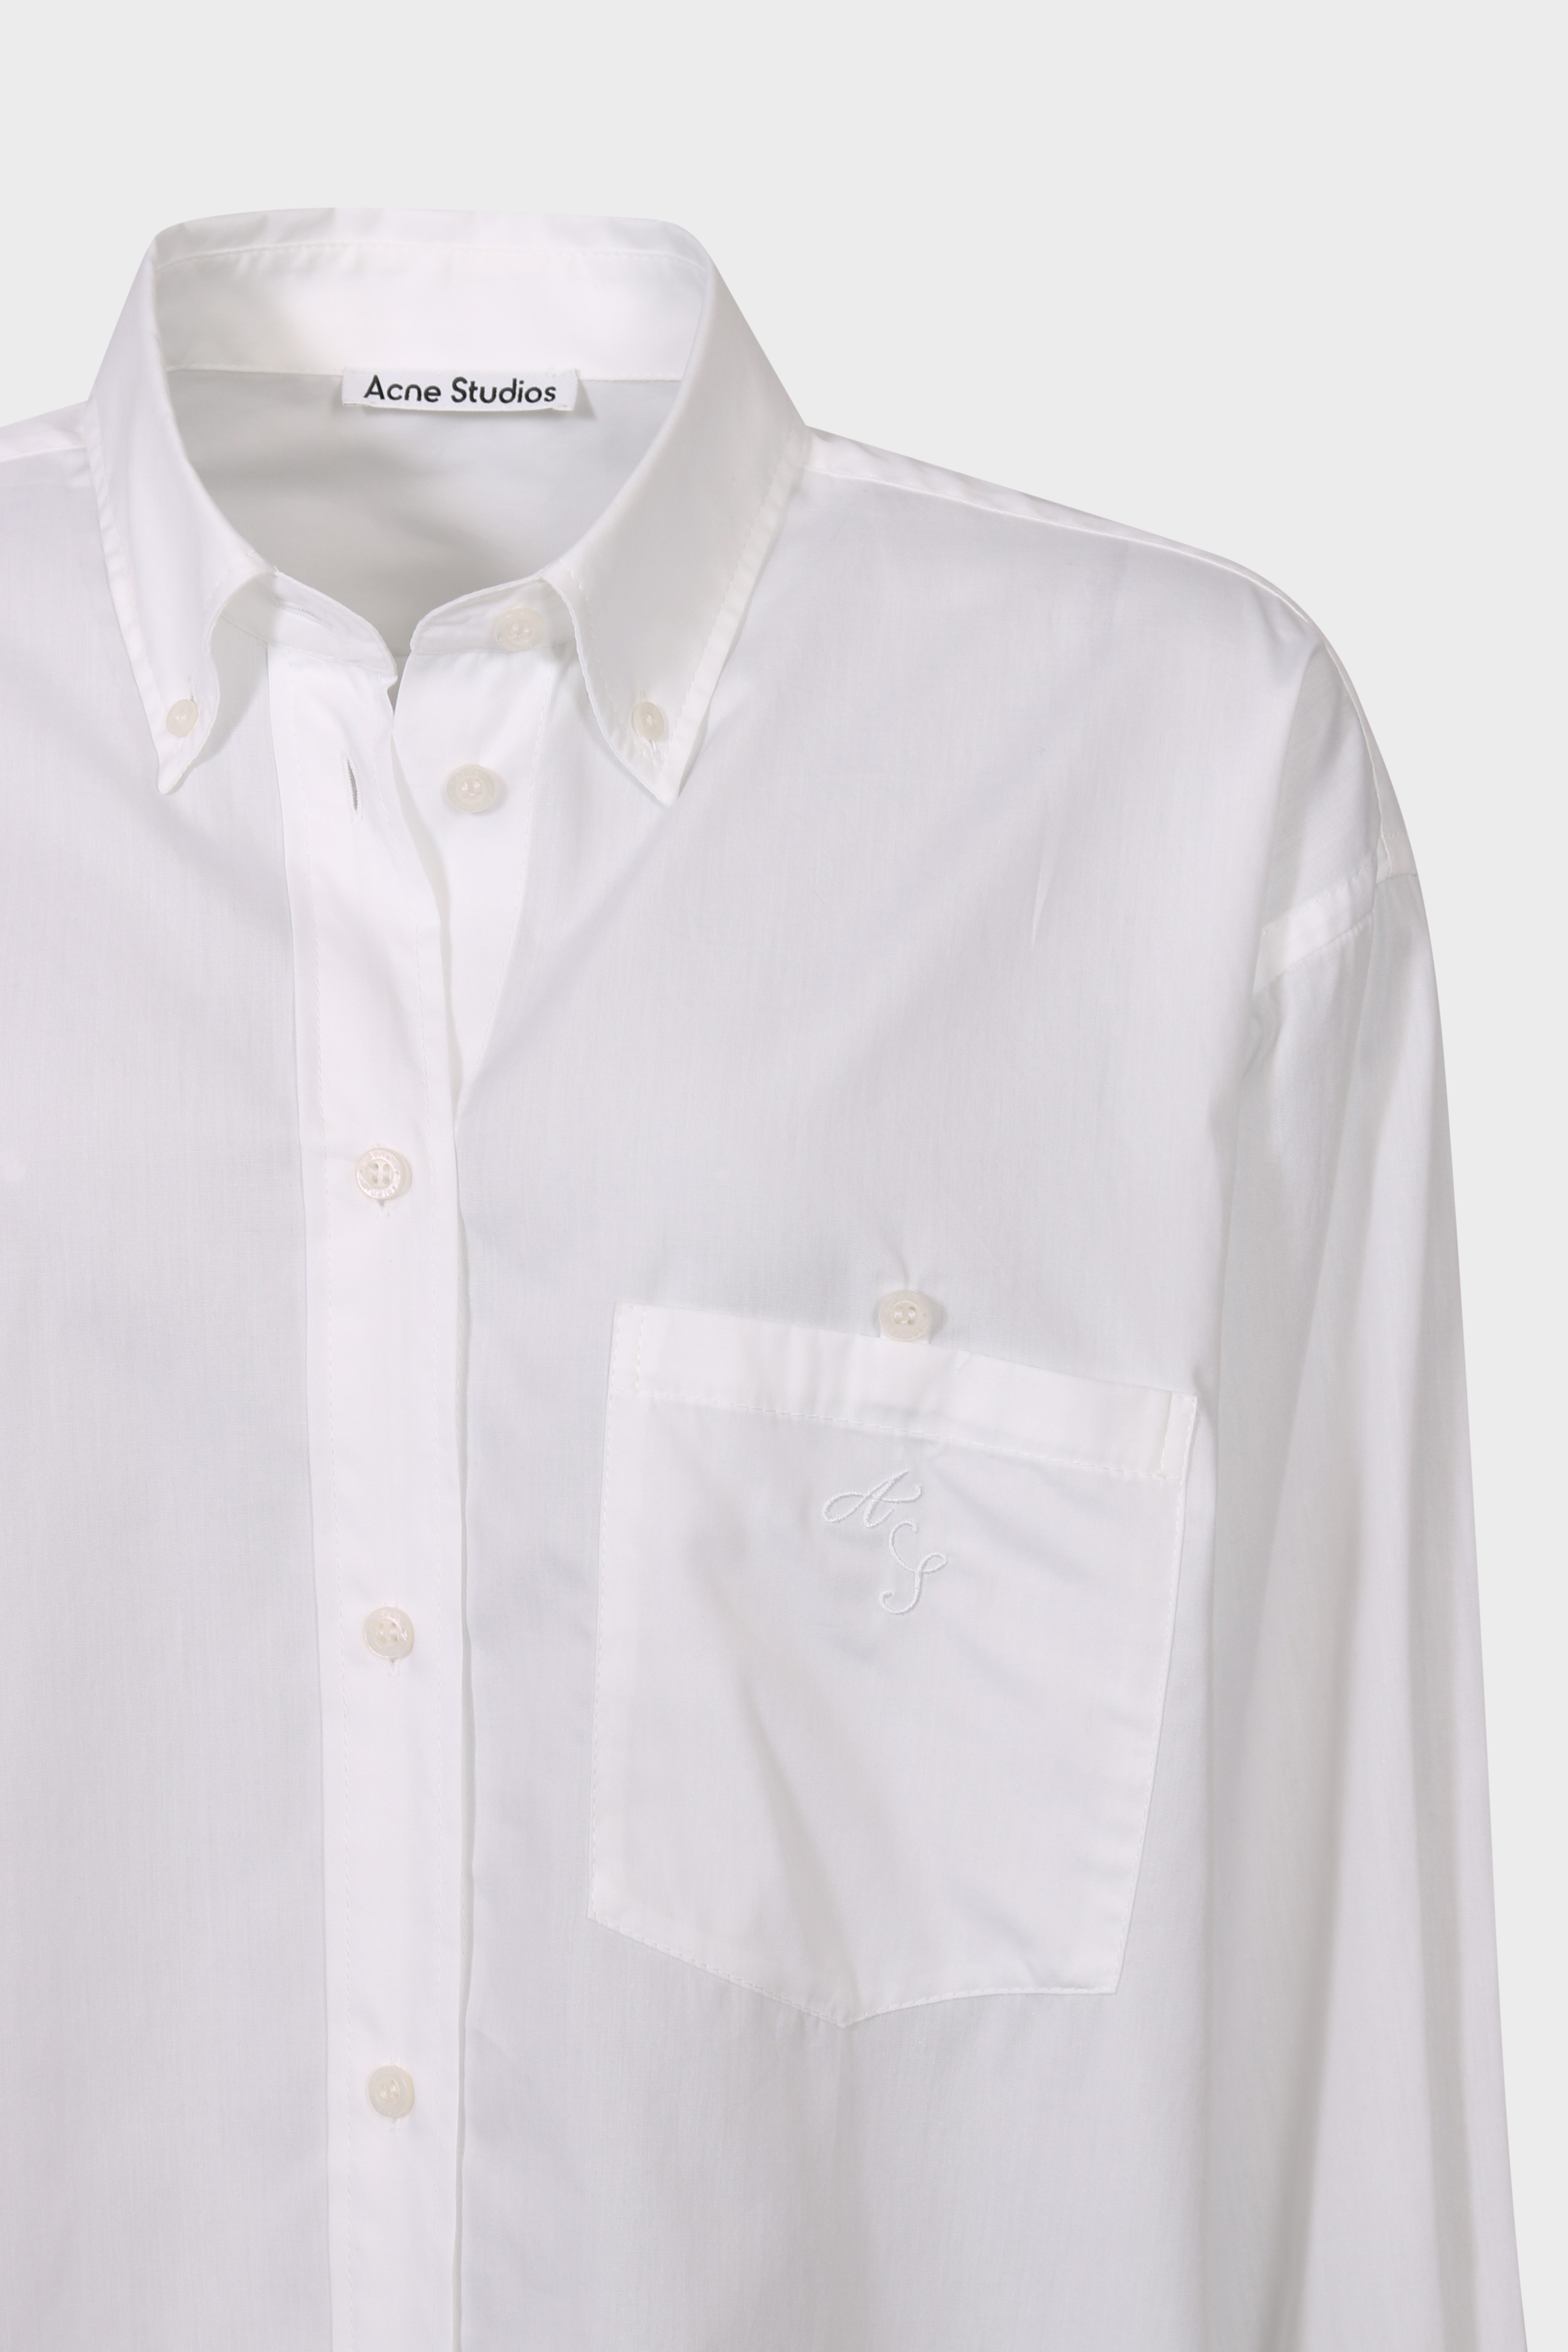 ACNE STUDIOS Oversize Shirt in White 34